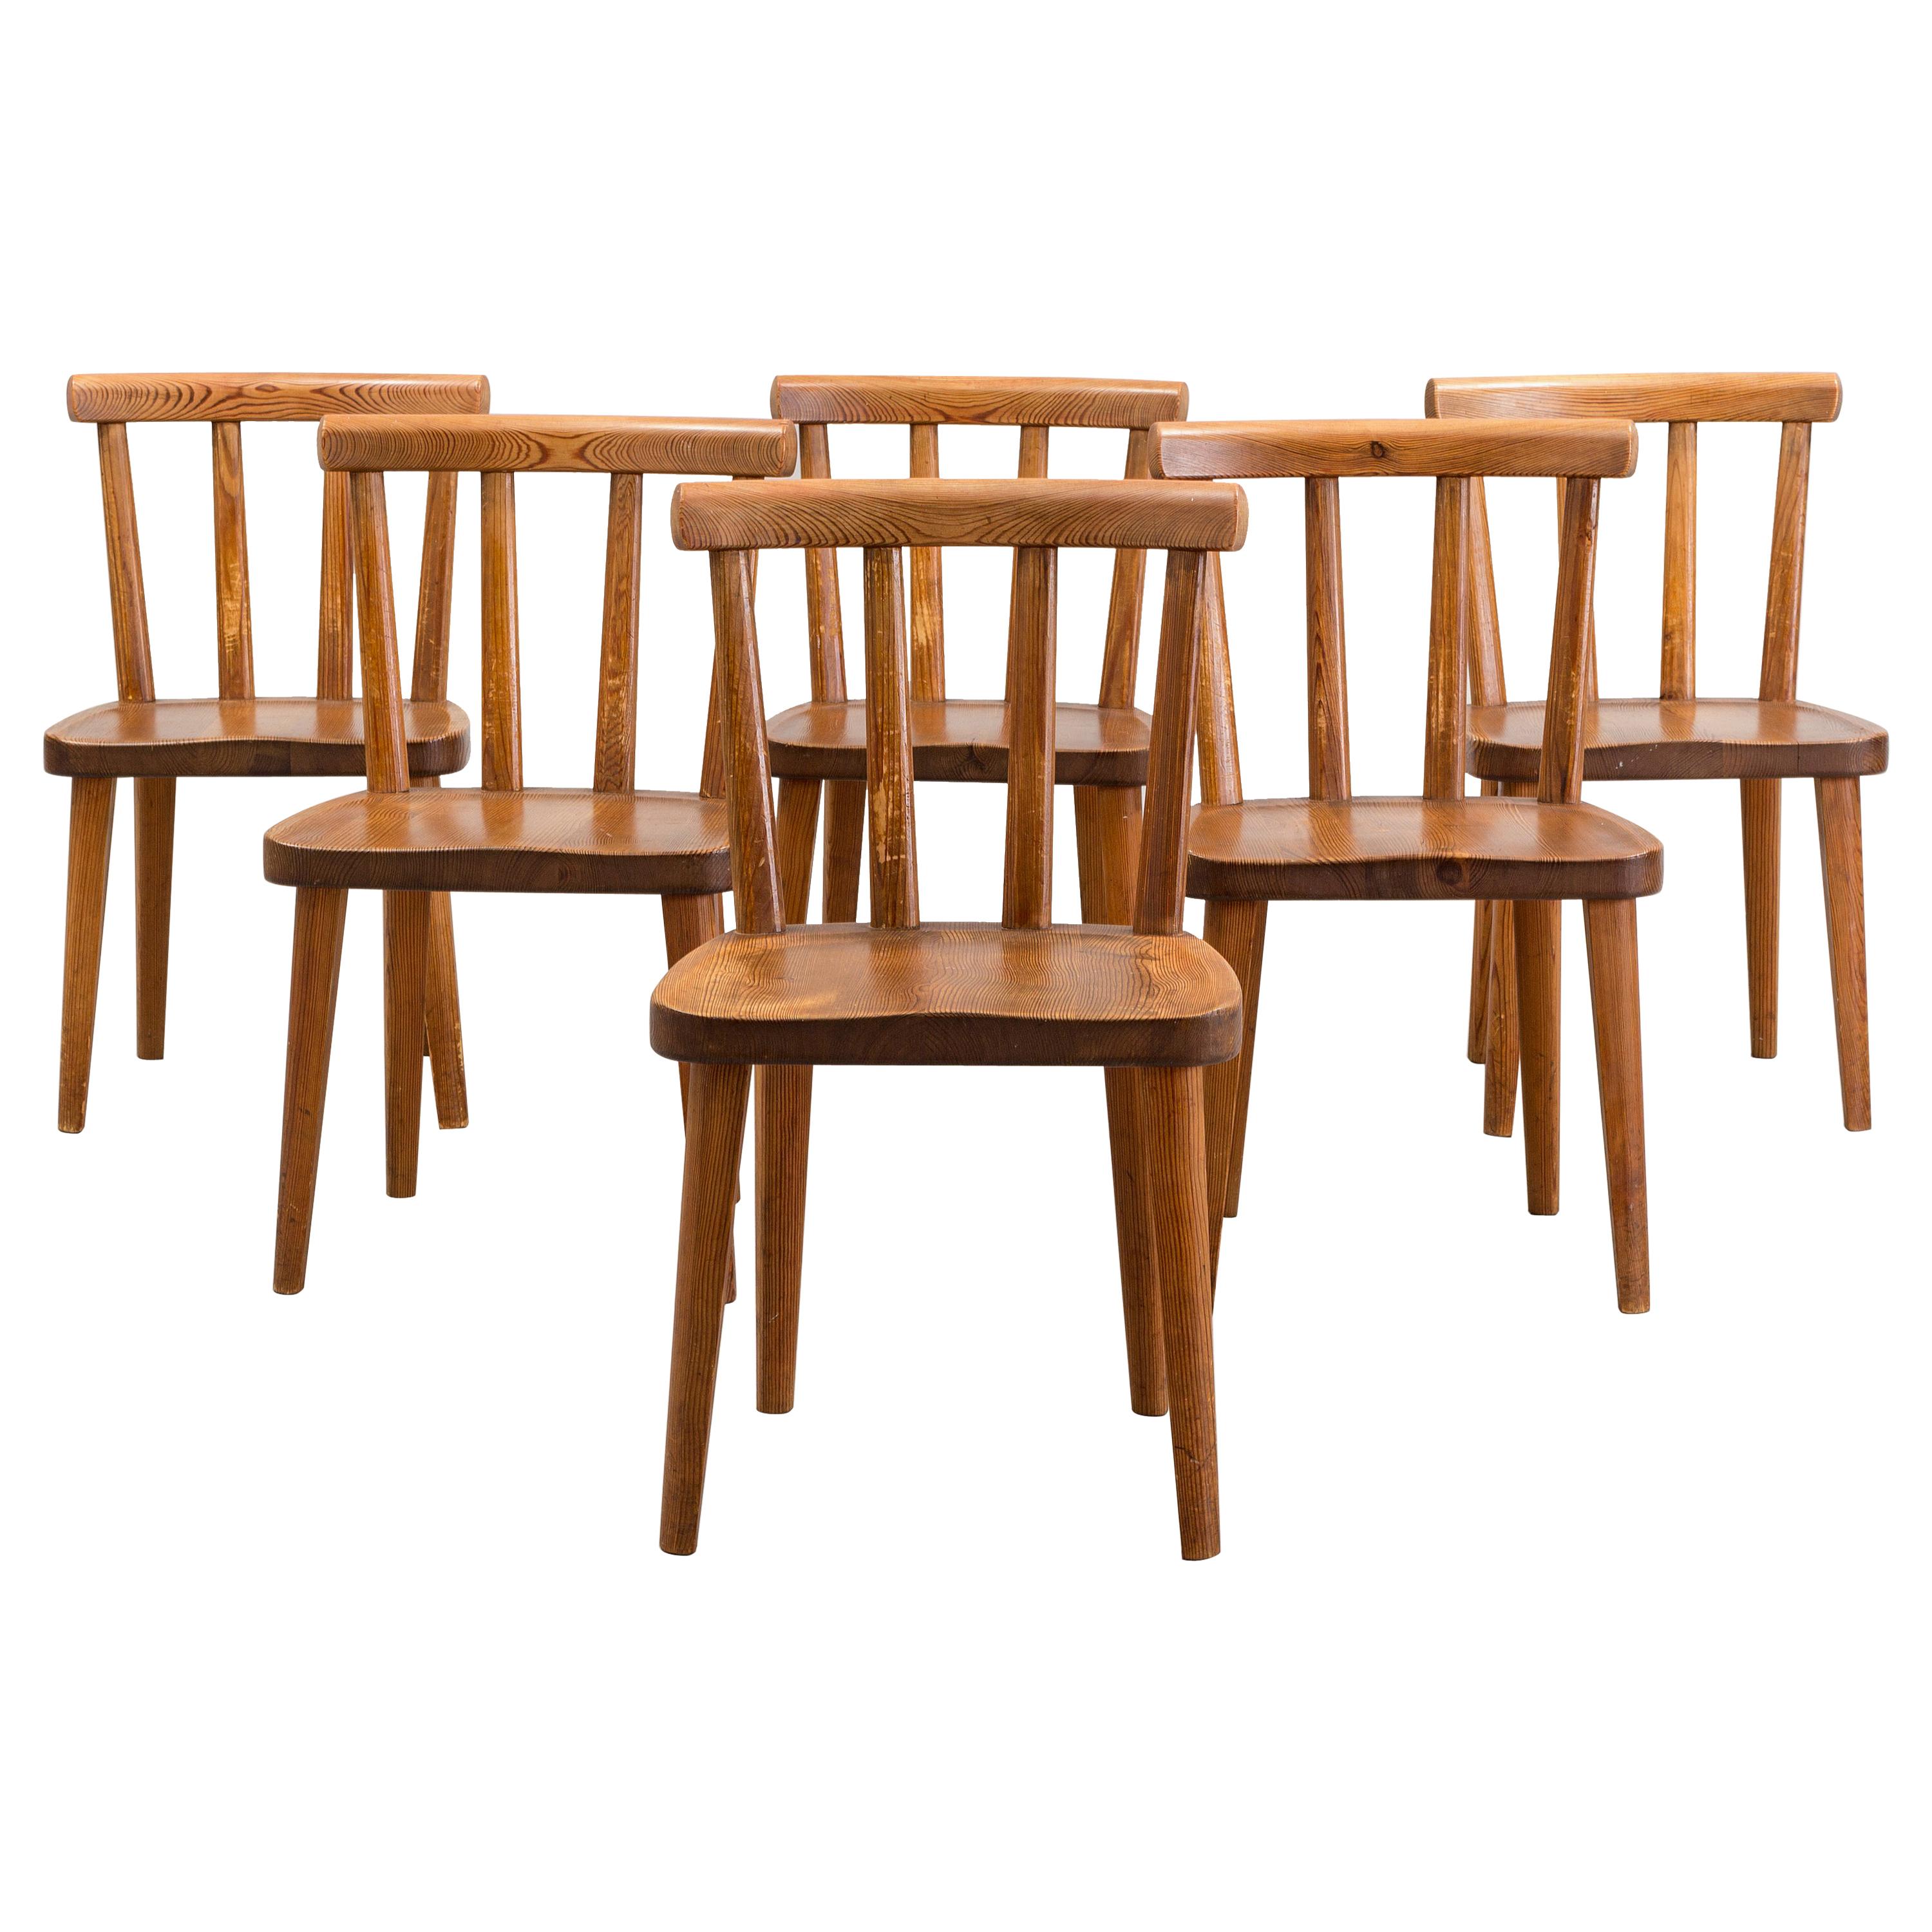 Set of Six Utö Chairs by Axel Einar Hjorth in Pine for Nordiska Kompaniet, 1930s